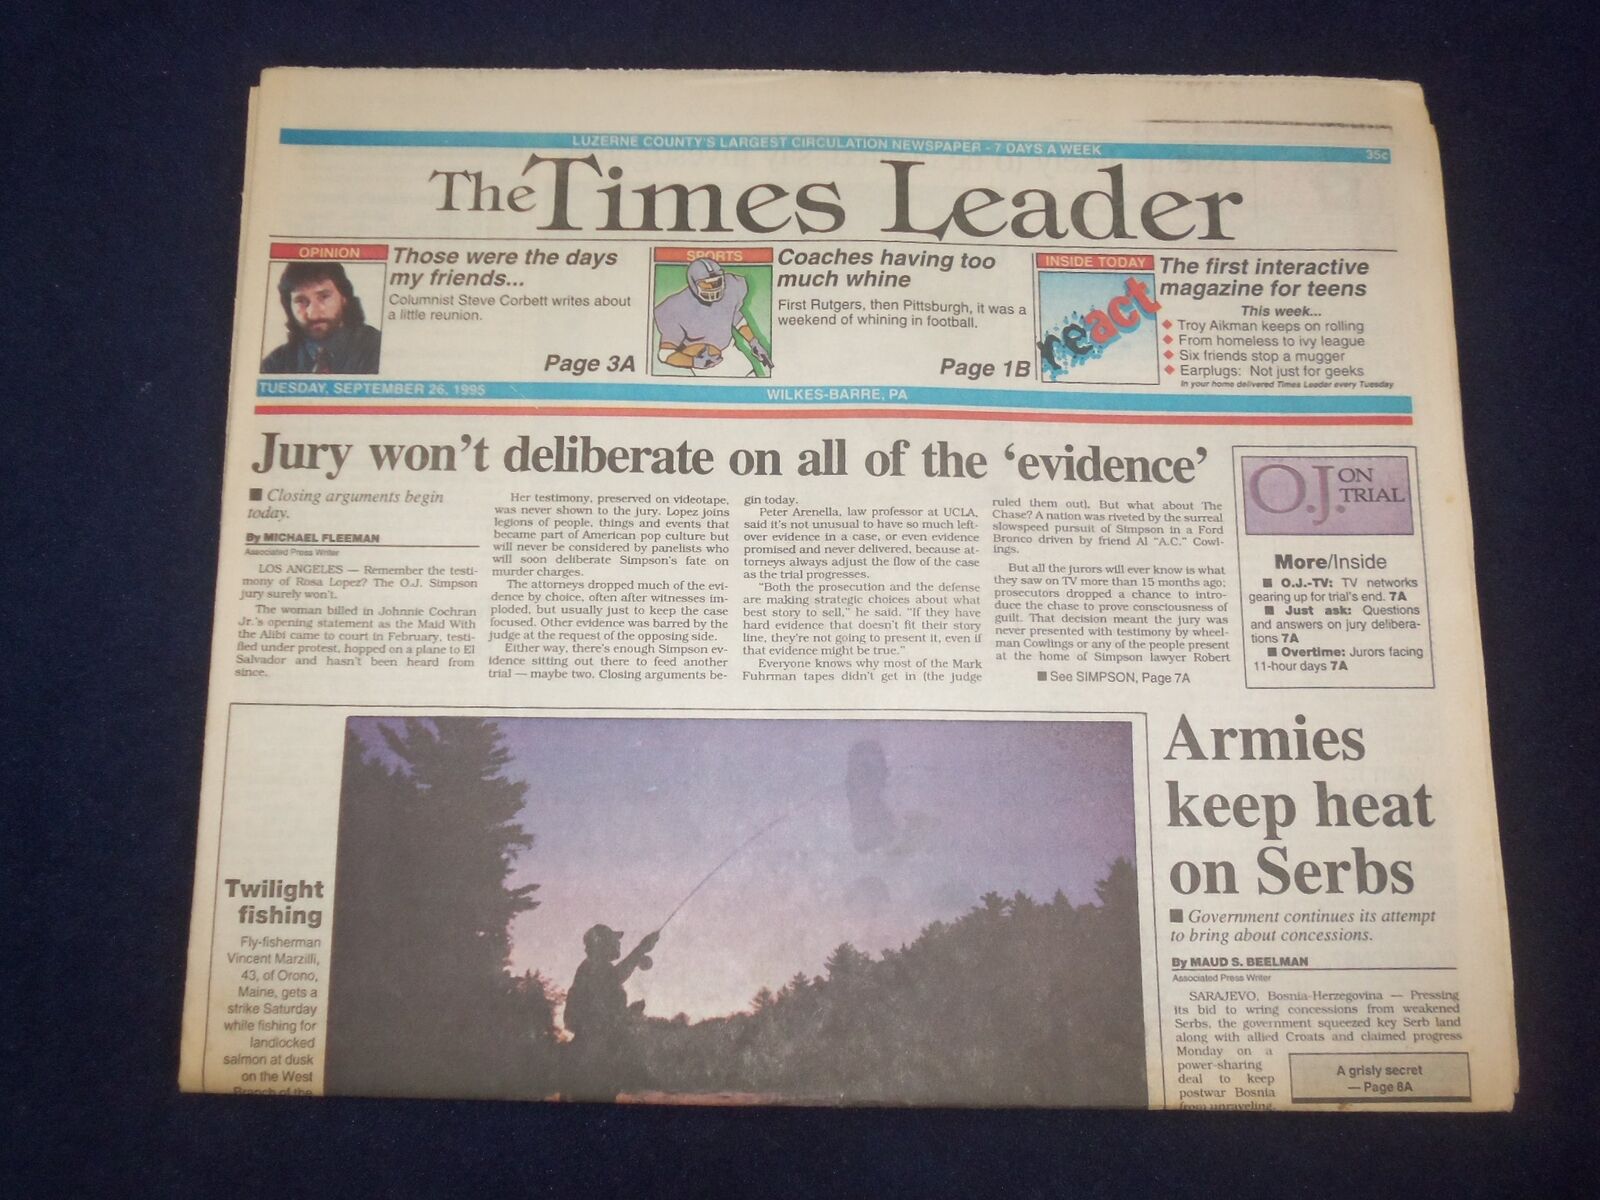 1995 SEP 26 WILKES-BARRE TIMES LEADER-O.J. JURY WON'T HEAR ALL EVIDENCE- NP 8131